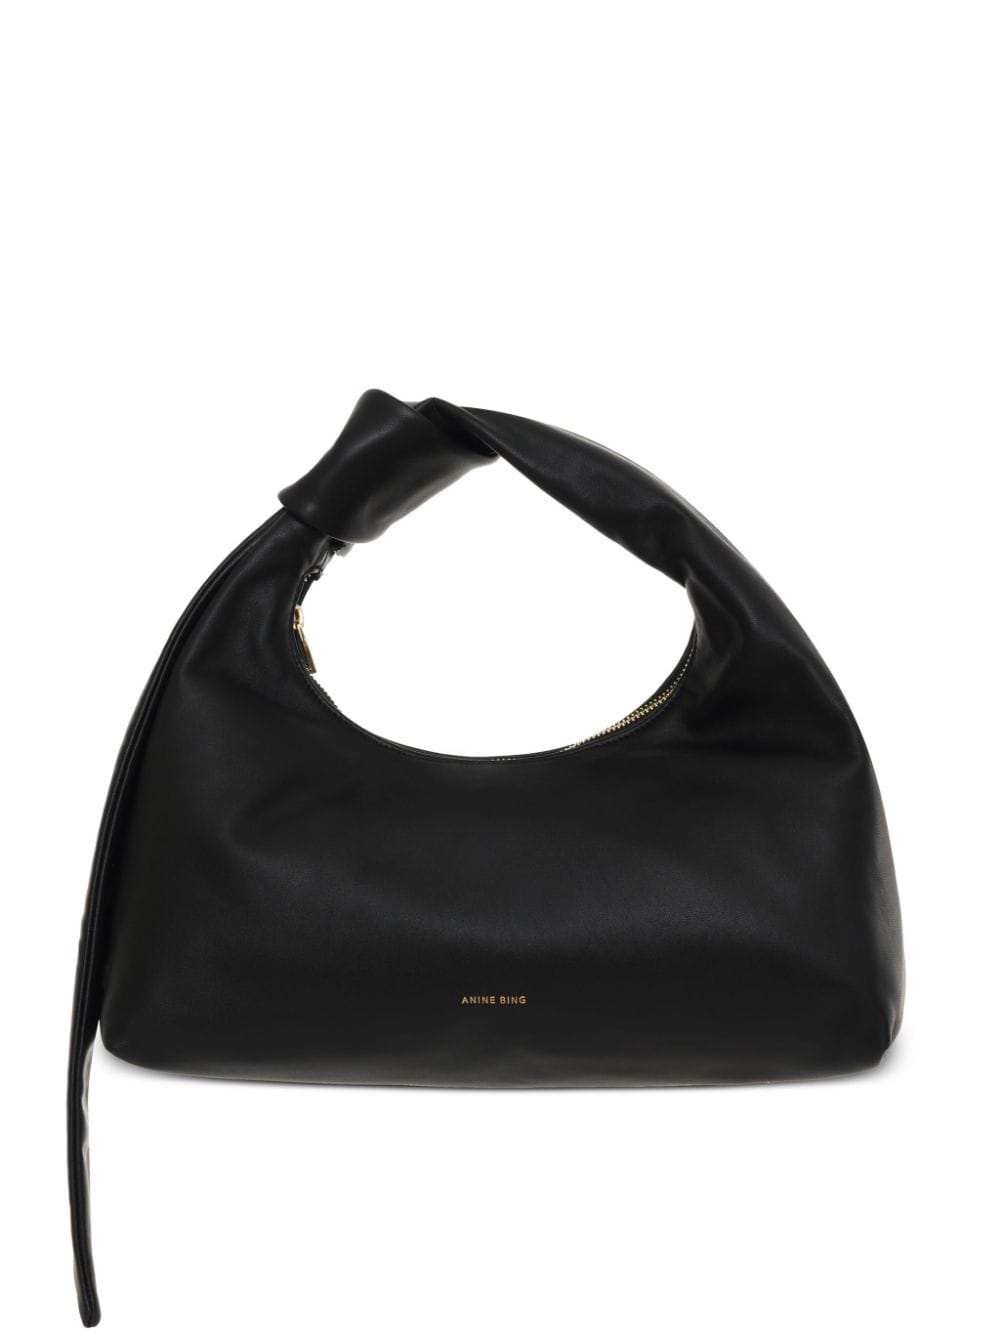 ANINE BING Grace Leather Shoulder Bag - Farfetch